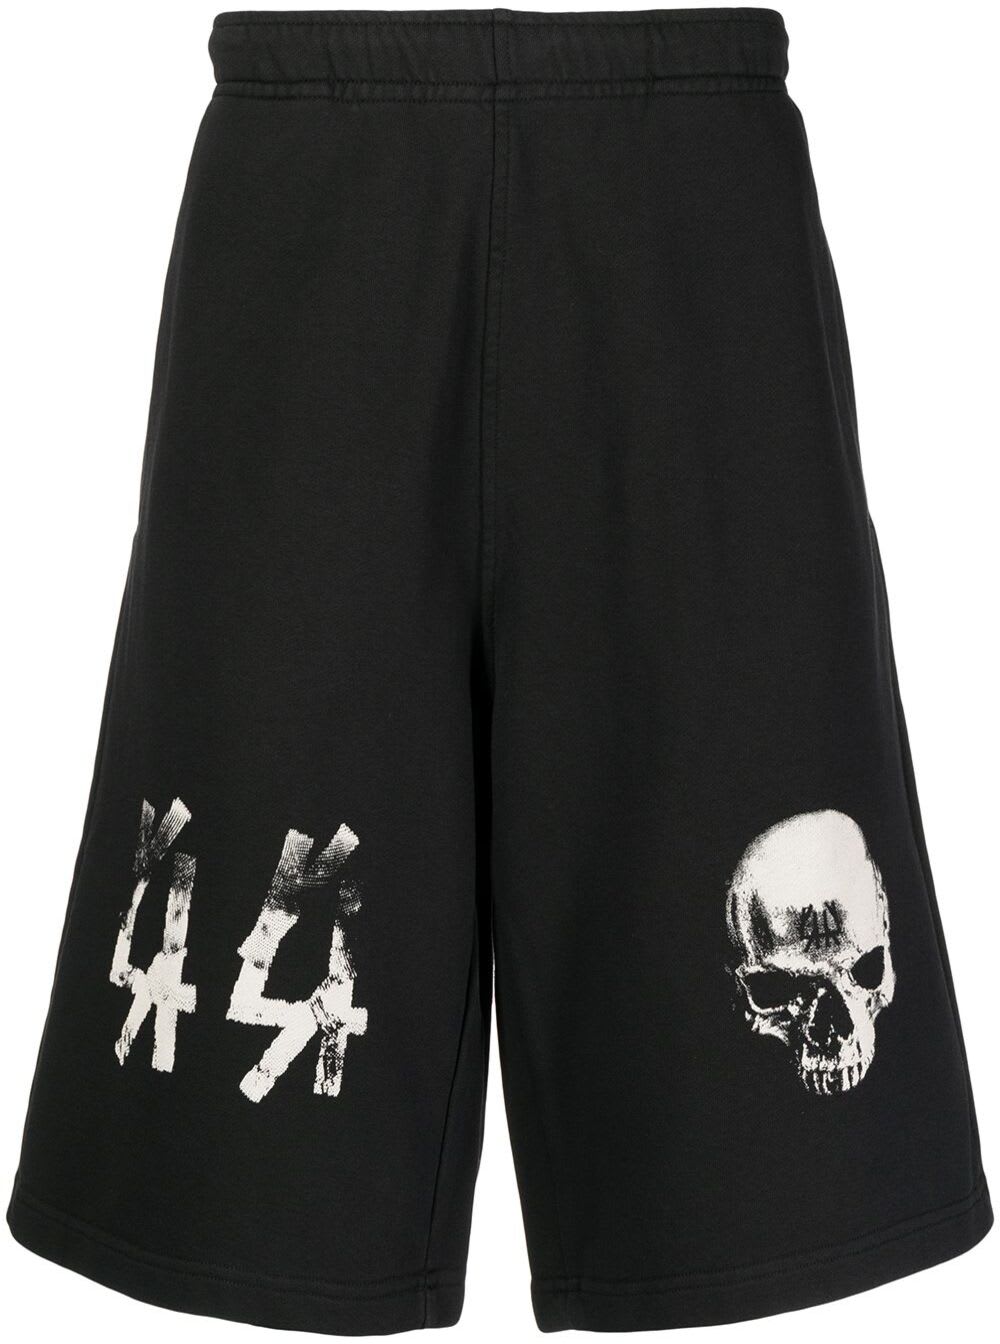 44 Label Group 44 Skull Shorts